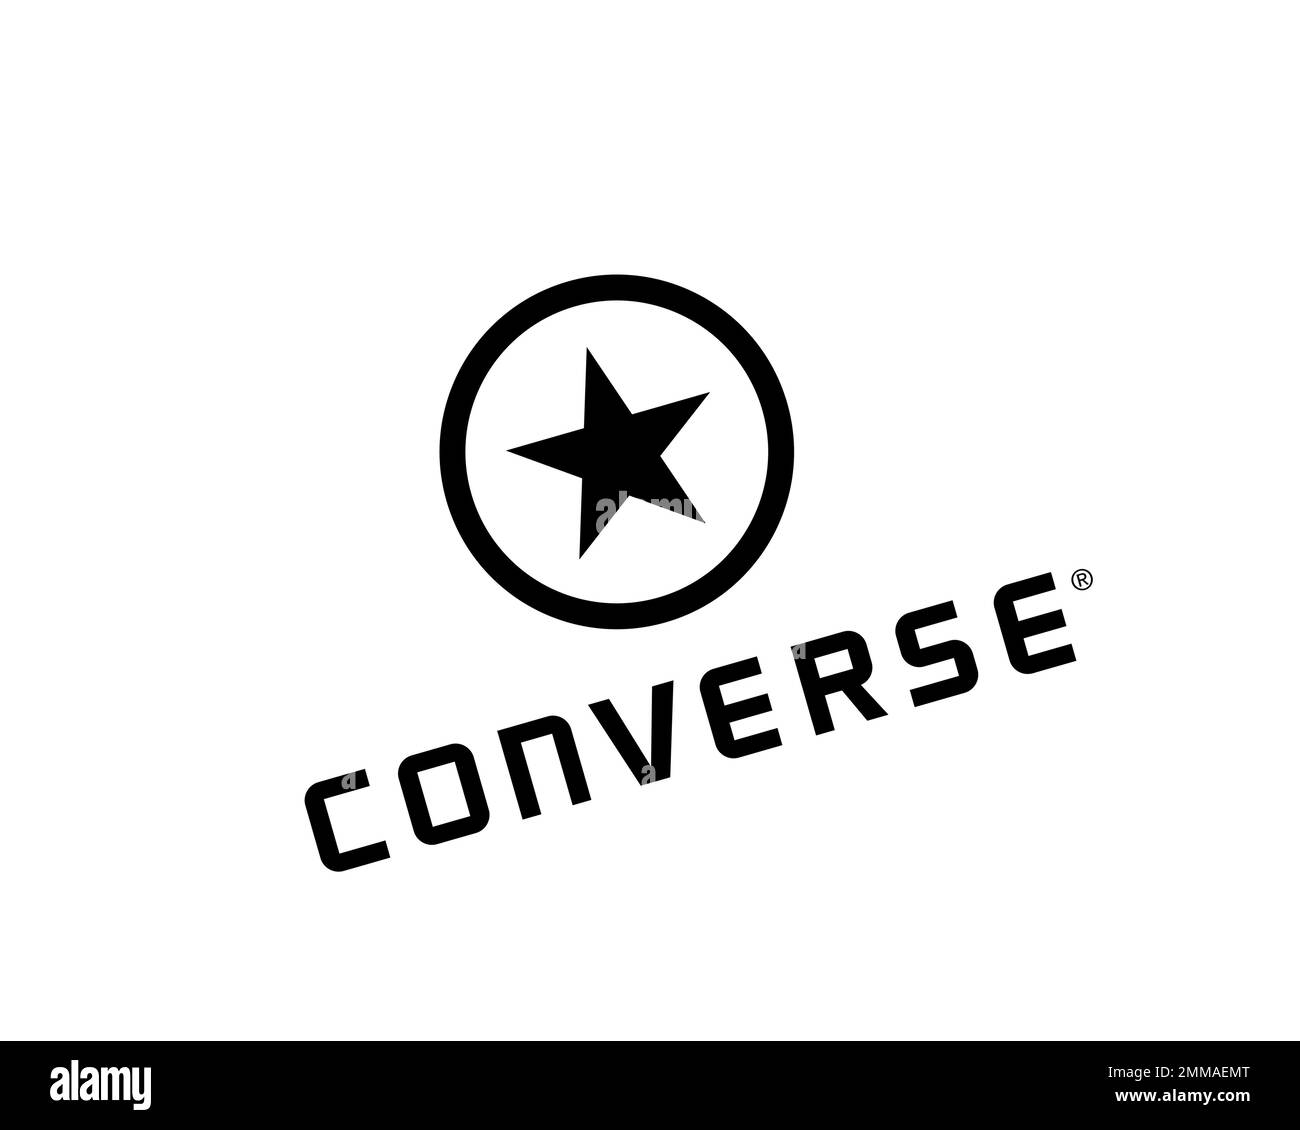 Converse (shoe company), rotated, white background, logo, brand name Stock Photo